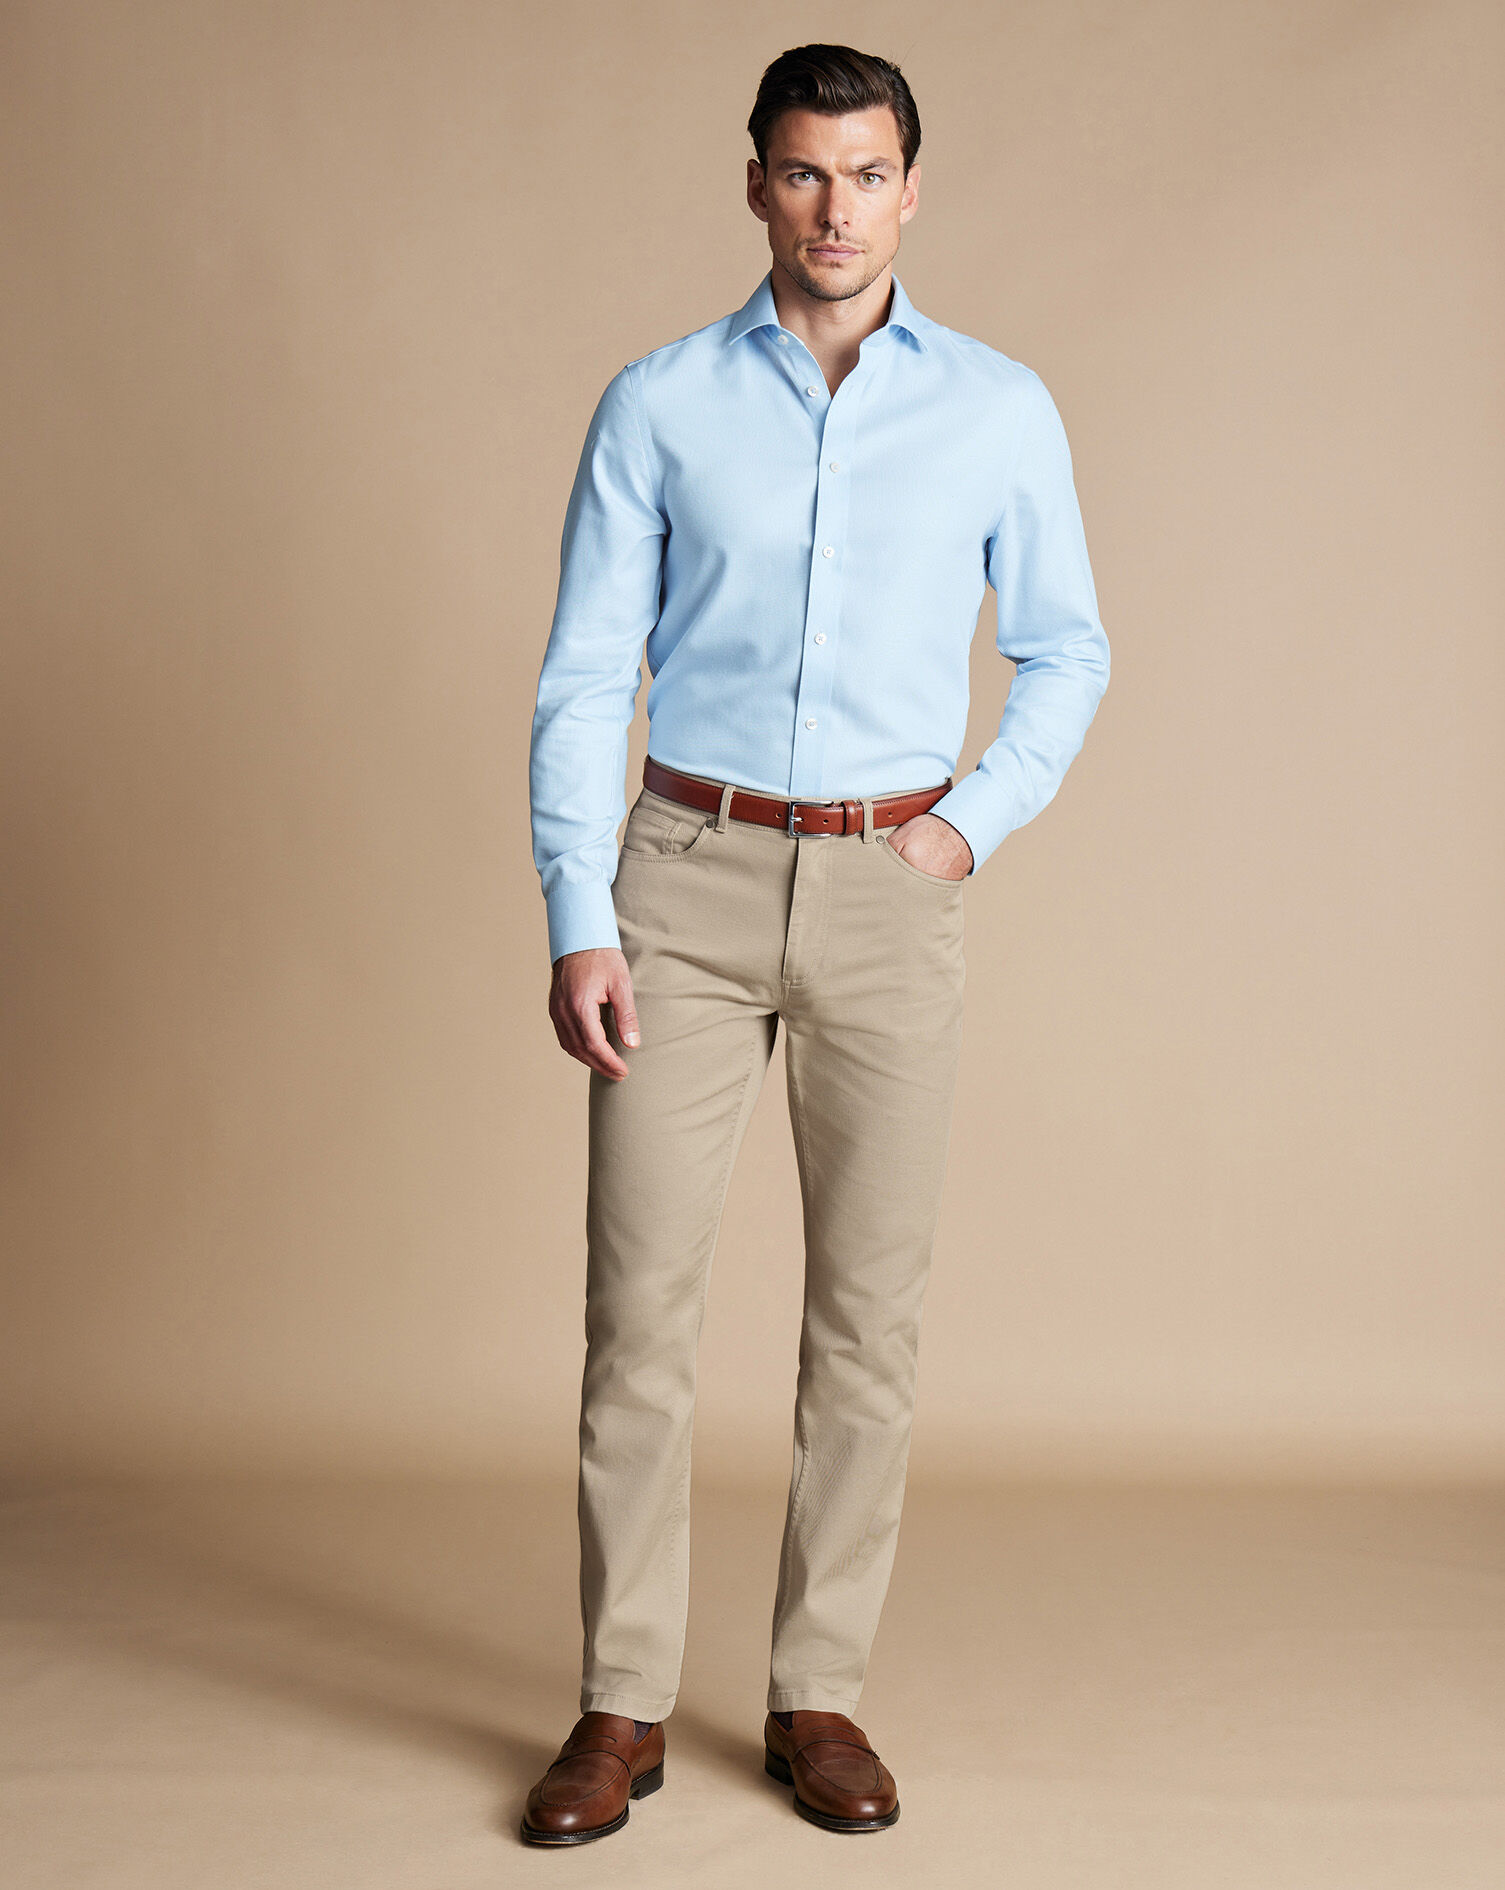 Men's & Women's Clothing, Pants, Shirts, Outerwear | Dockers® US